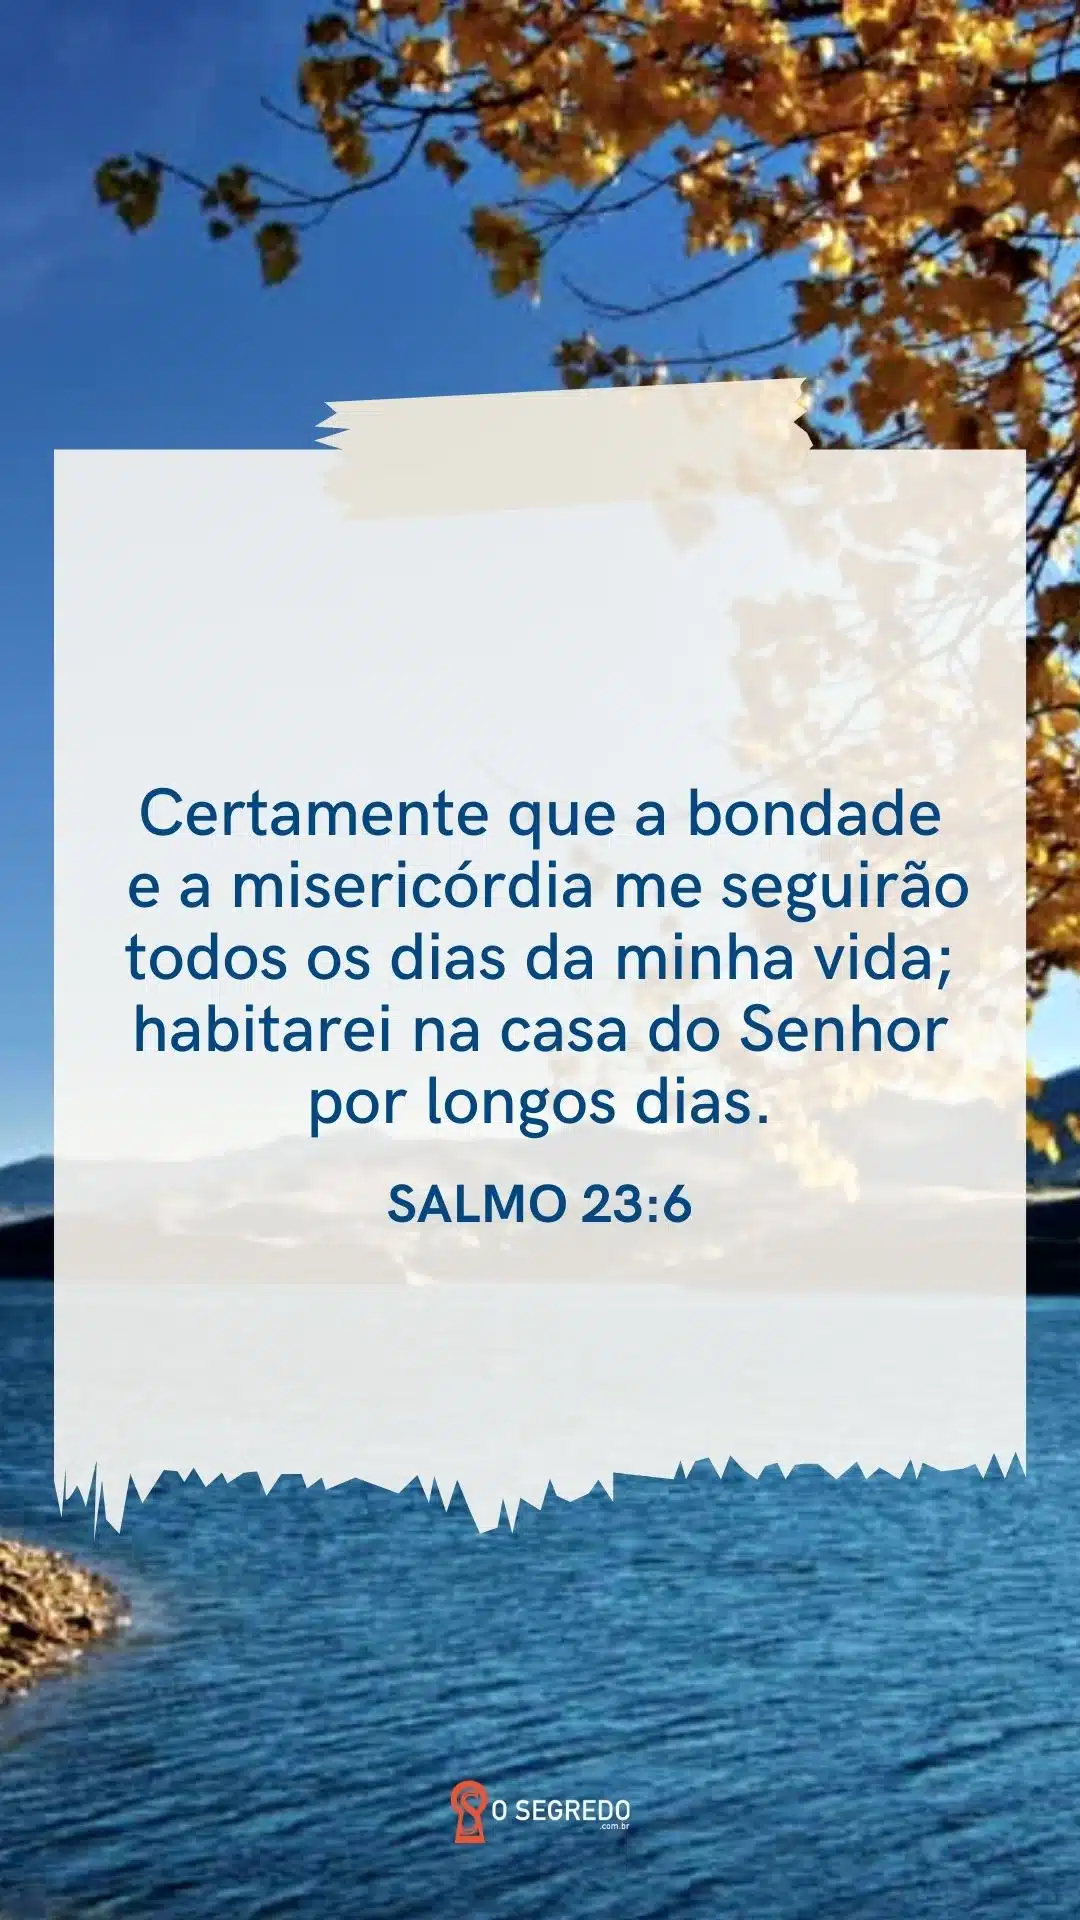 Salmo 23